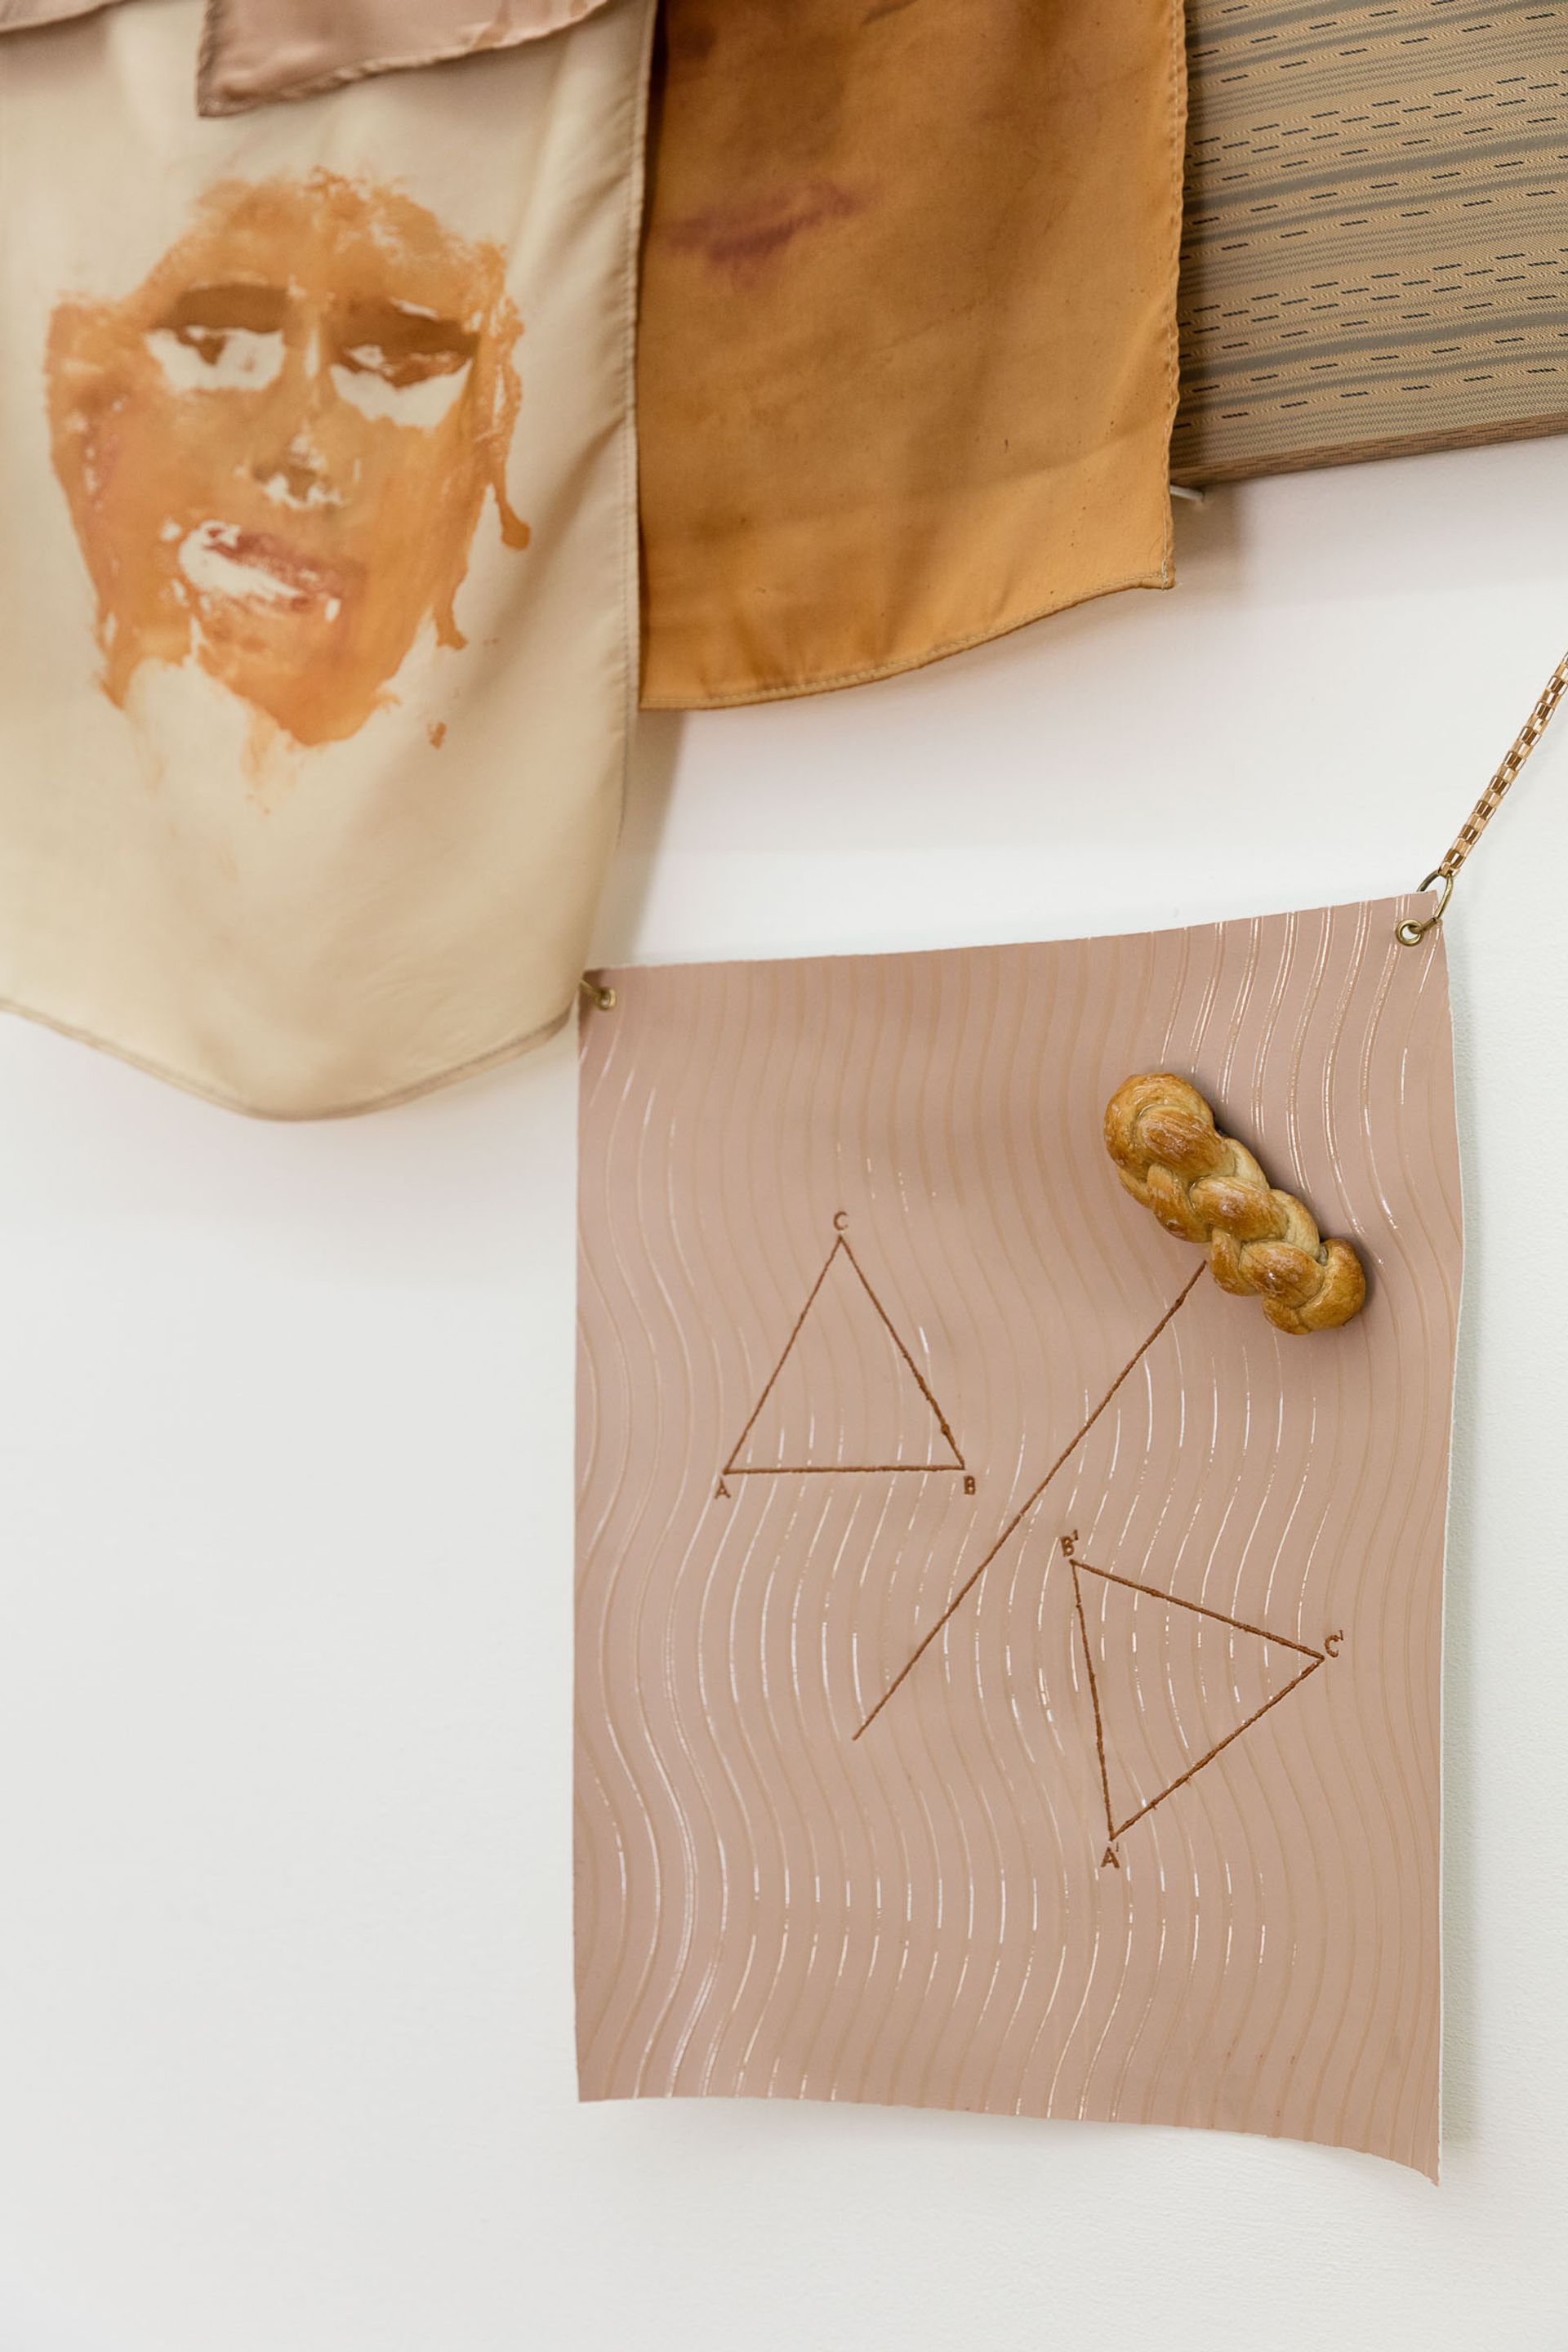 Ana Navas, Pyramide (Detail), 2018, fabric, hair, silk paint, bread, epoxy, 145 × 155 cm, photo: Sebastian Kissel